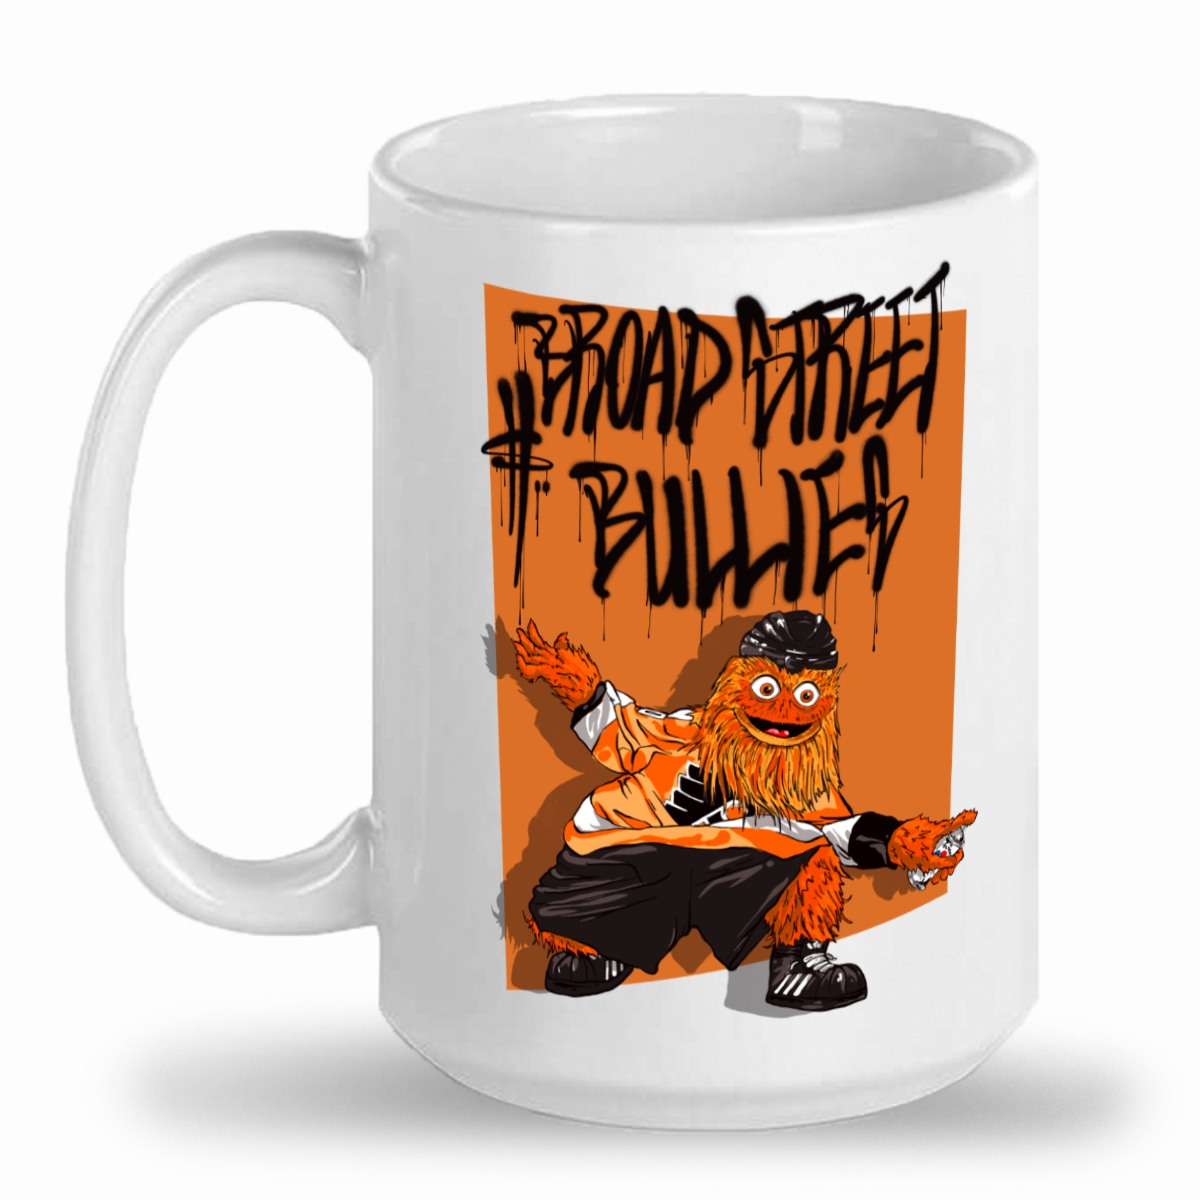 Broad Street Bullies Mug Large (Ceramic)